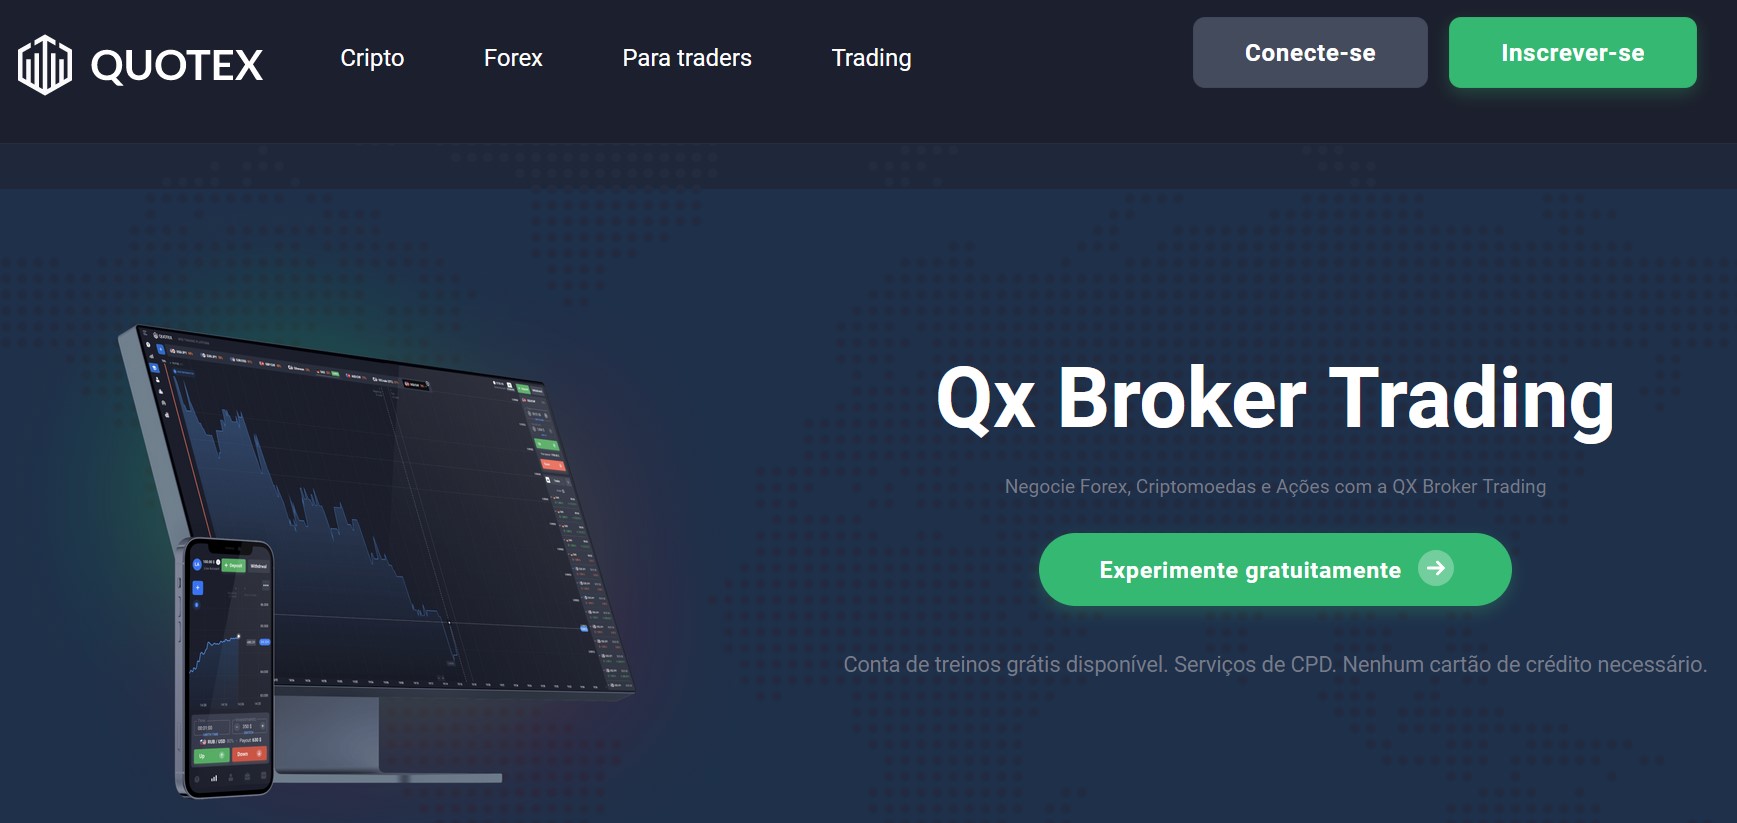 QX Broker: A Revolutionary Innovation That Makes Easy To Trade Digital Assets